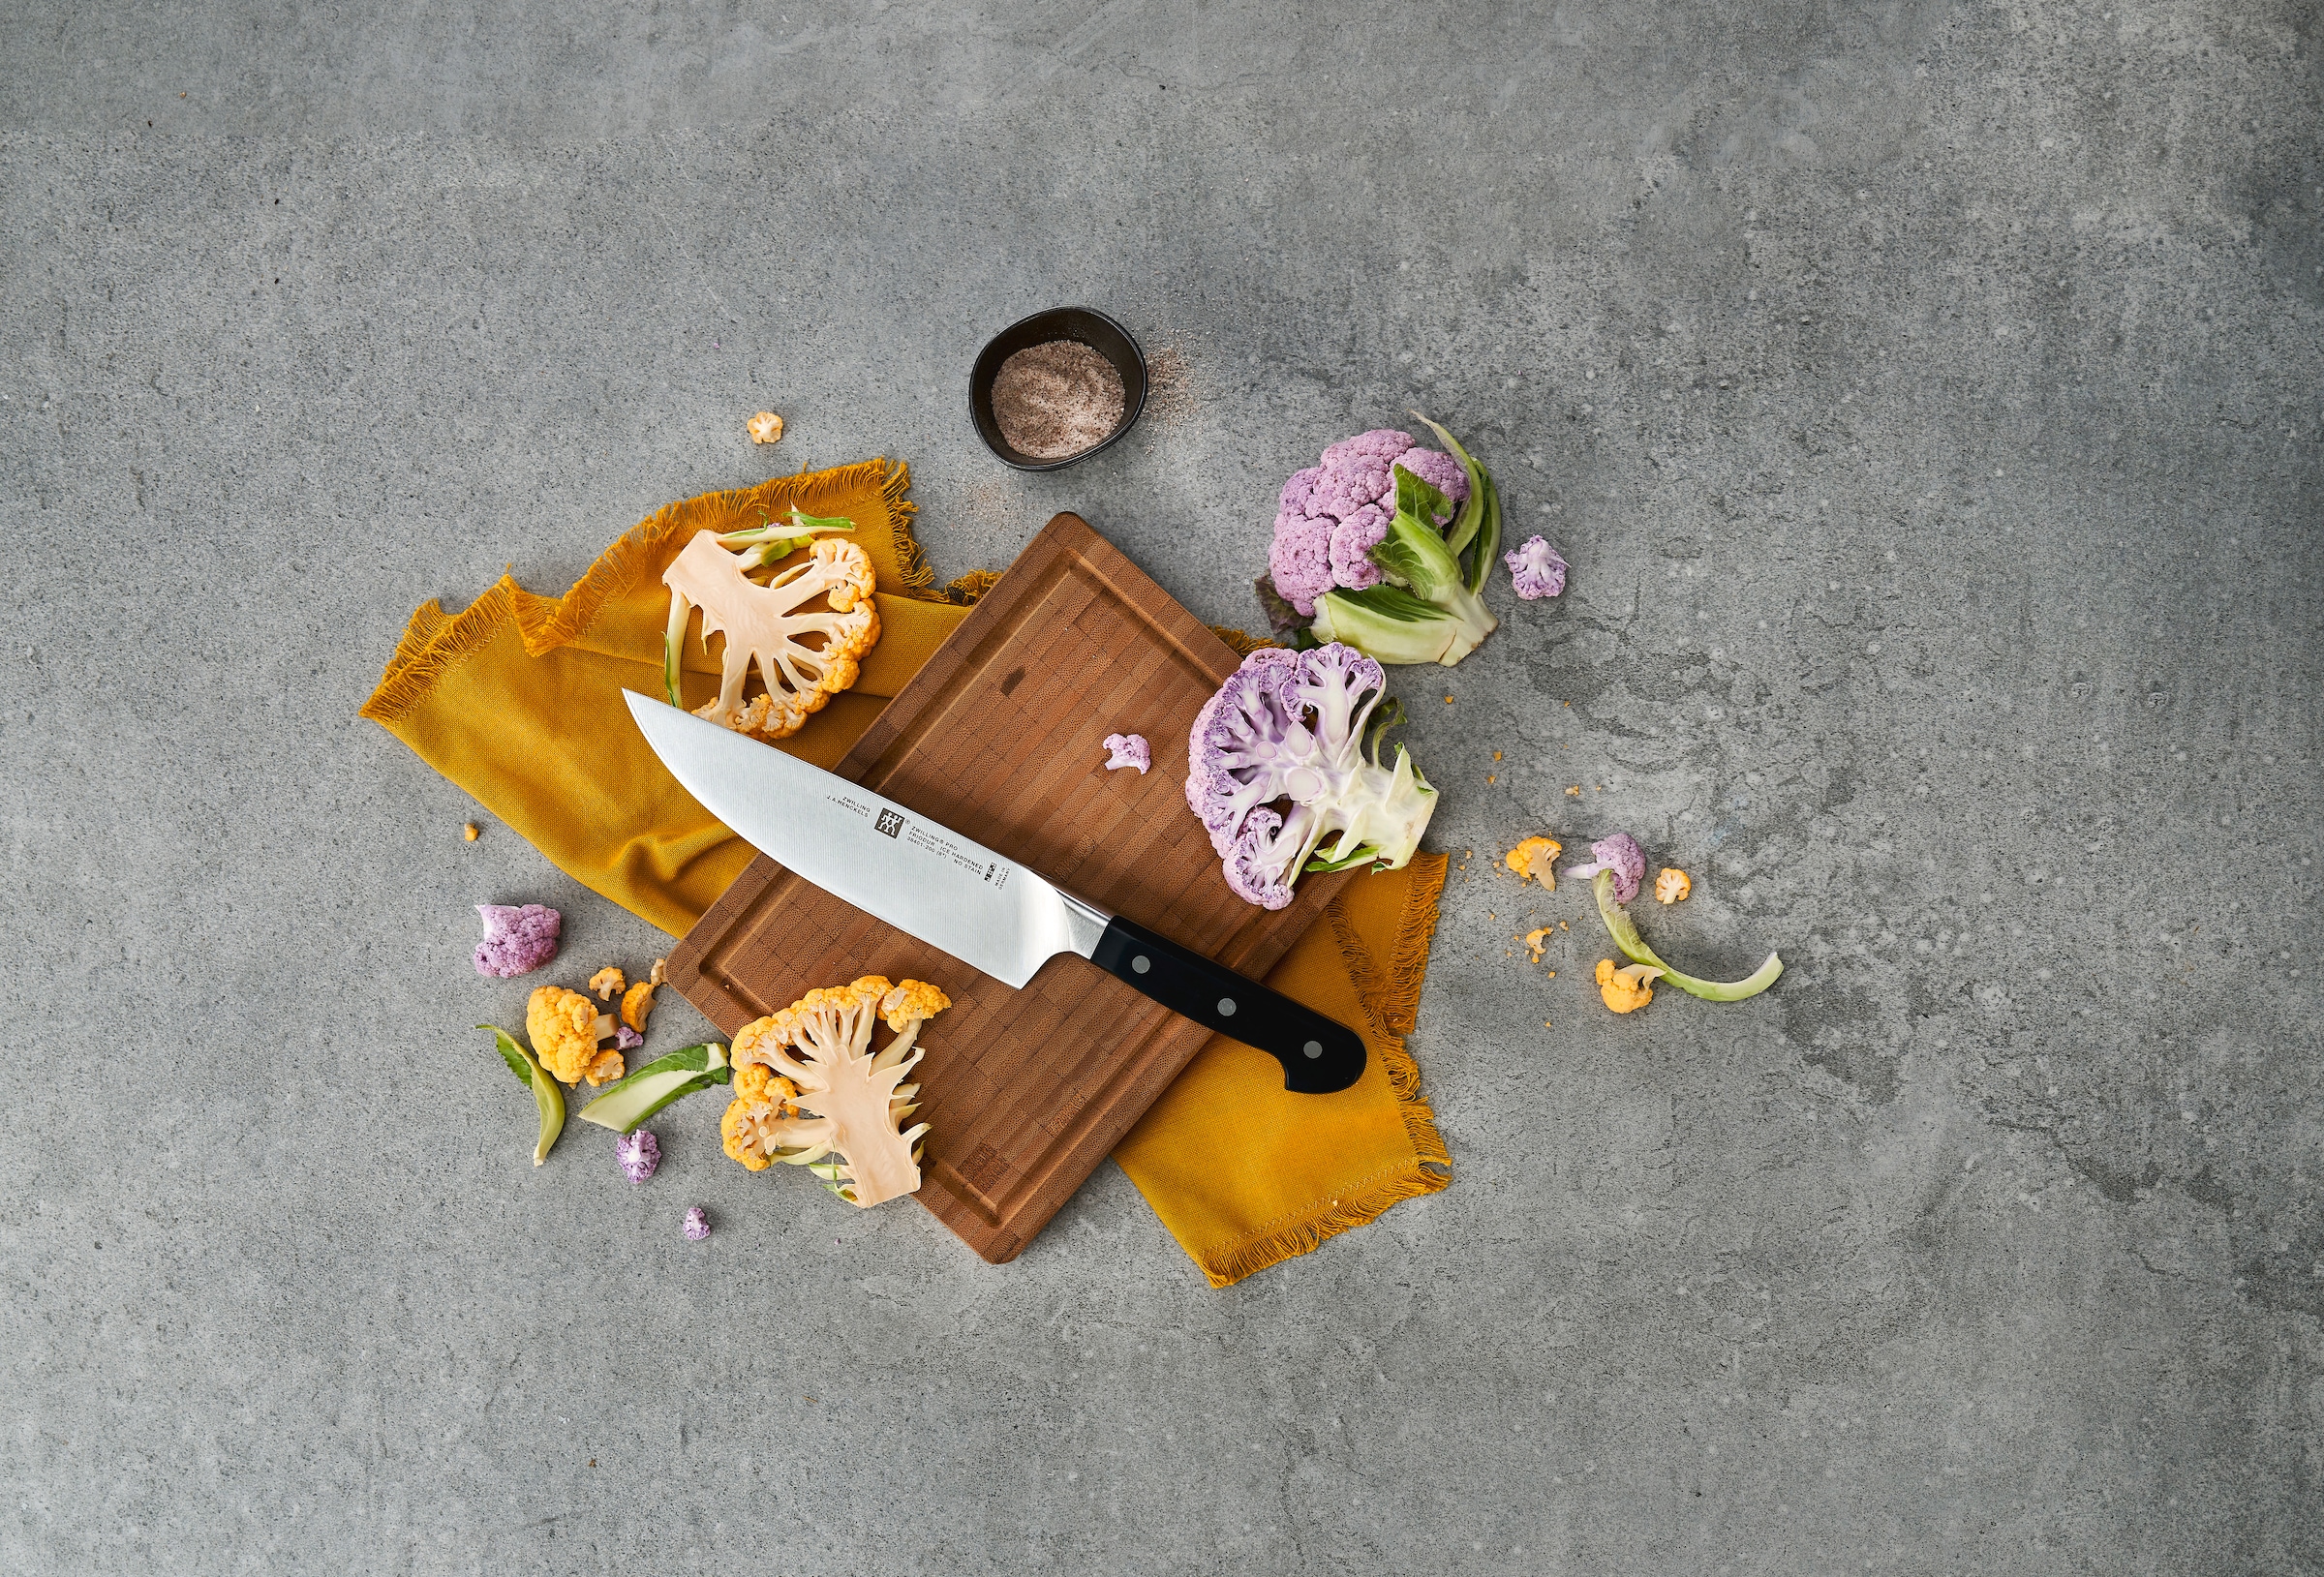 Zwilling Messer-Set »Pro«, (Set, 3 tlg., Spick- &Garniermesser (11 cm),Fleischmesser (20 cm)Kochmesser (20 cm), Edelstahl 18/10, aus einem Stück geschmiedet